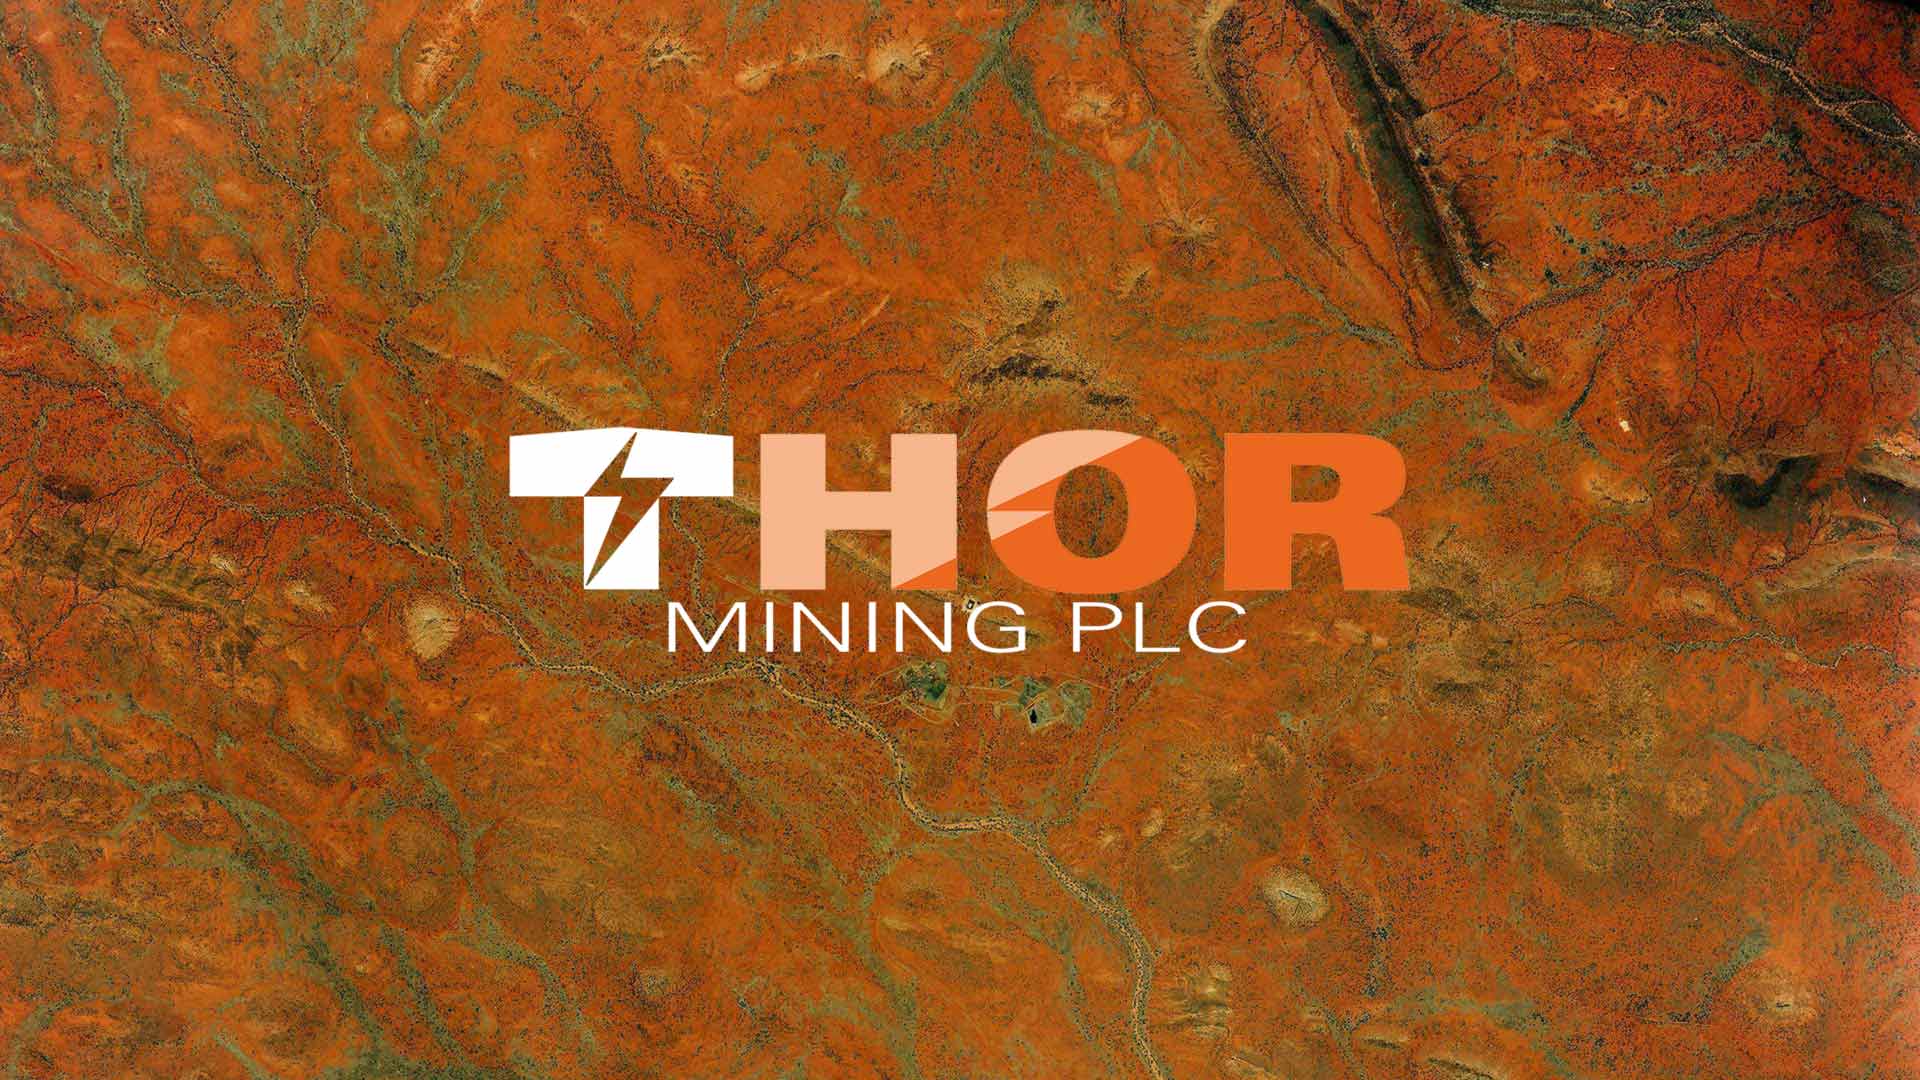 Thor Mining